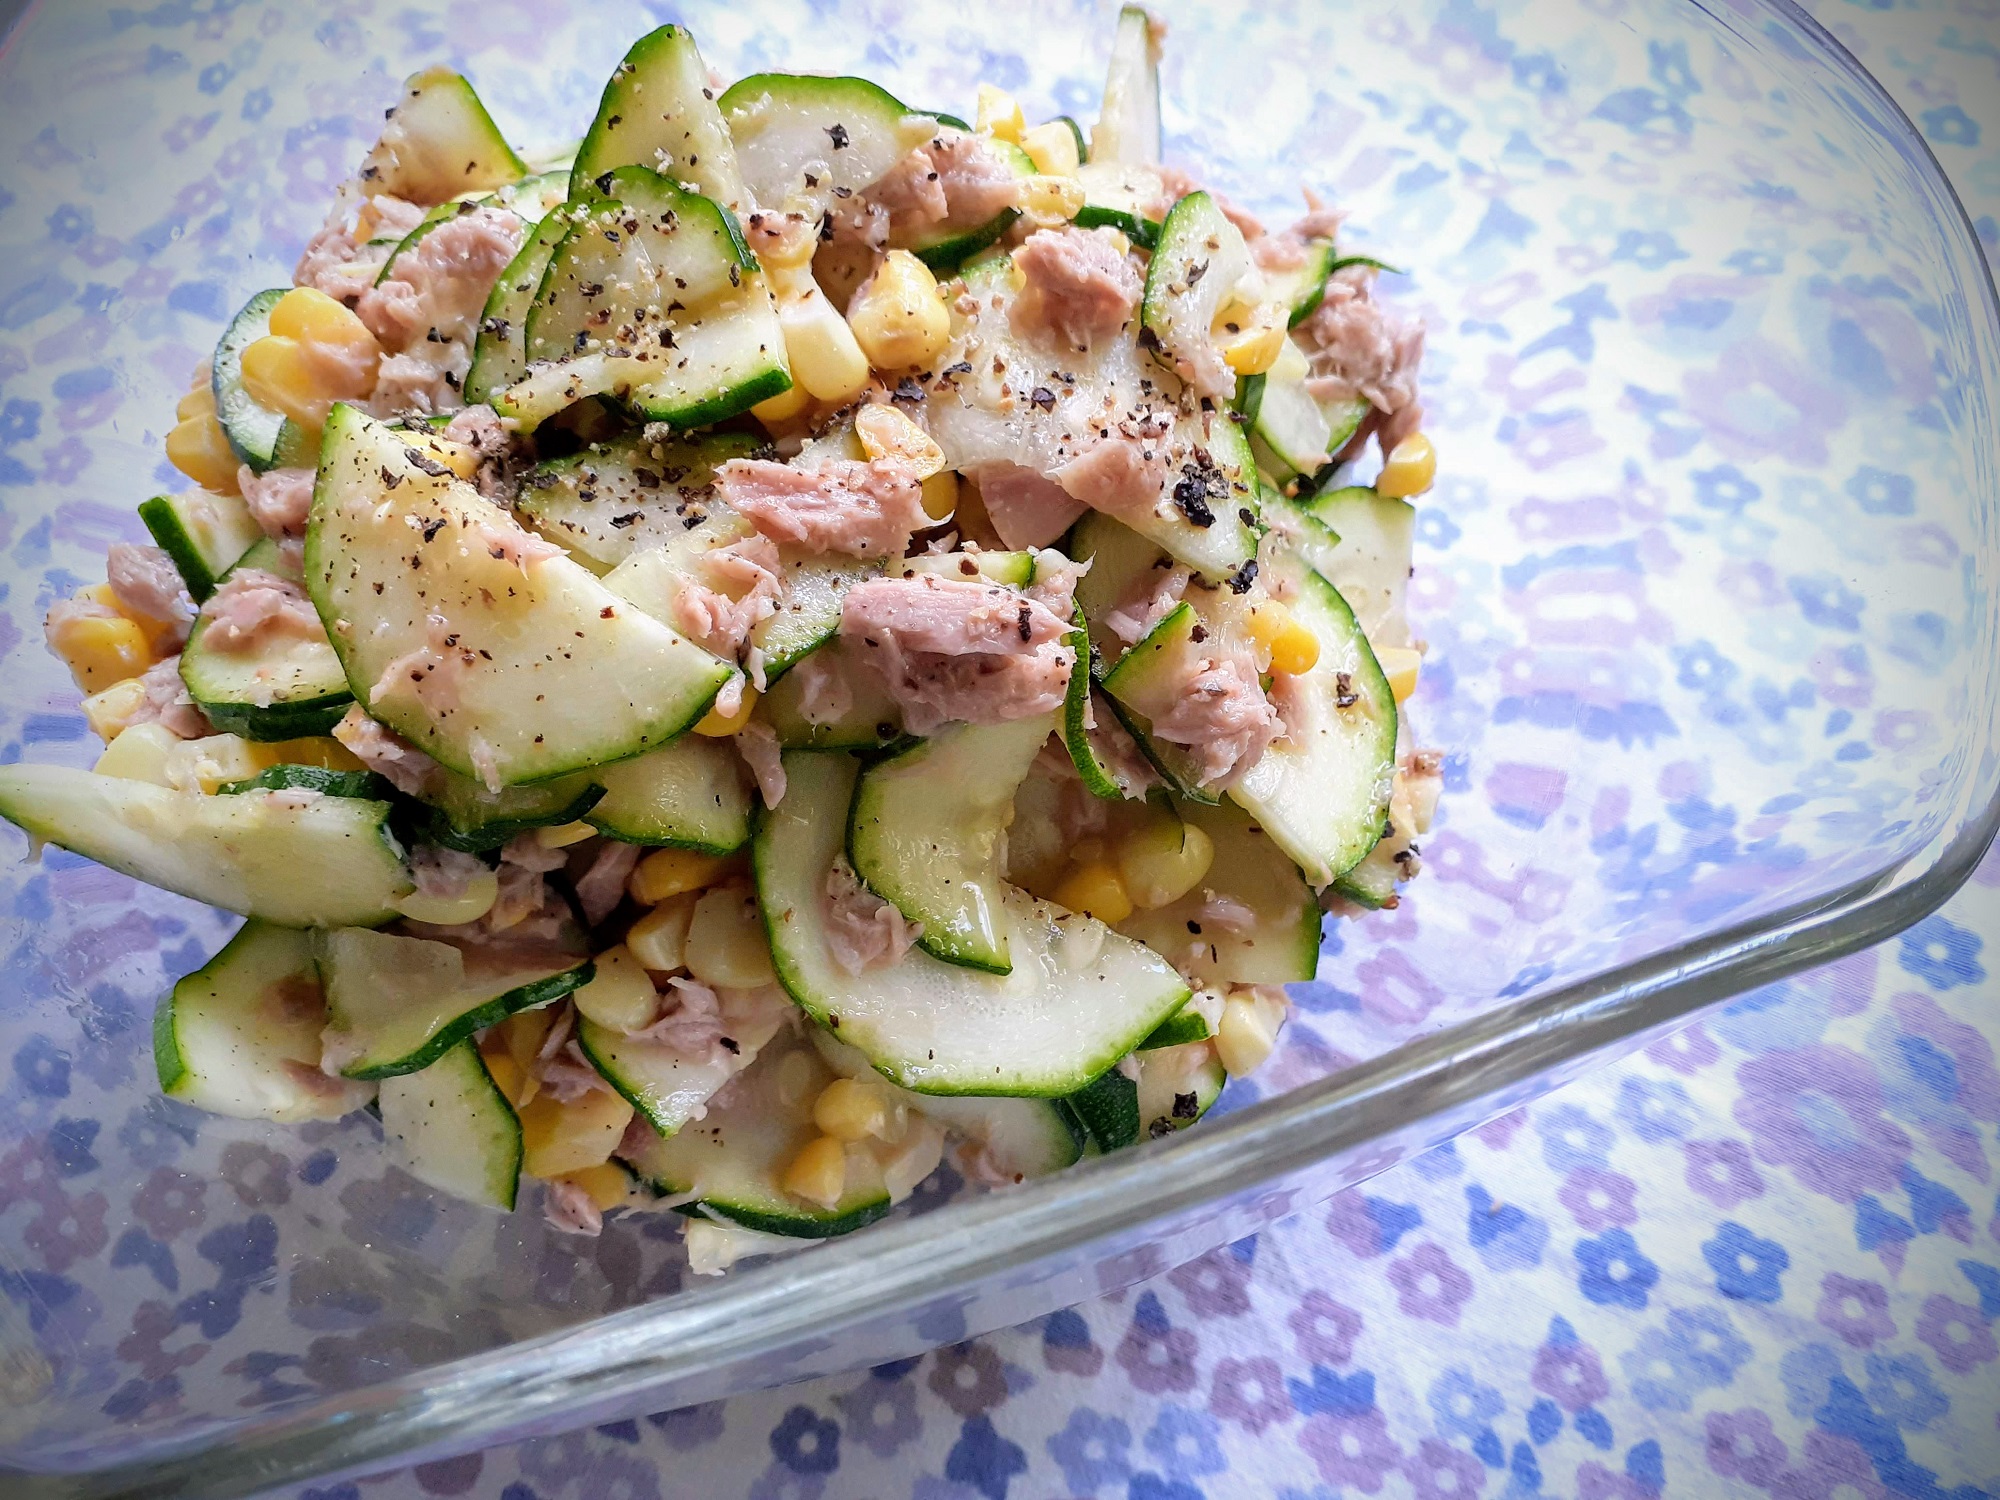 Courgette and Corn Salad with Tuna